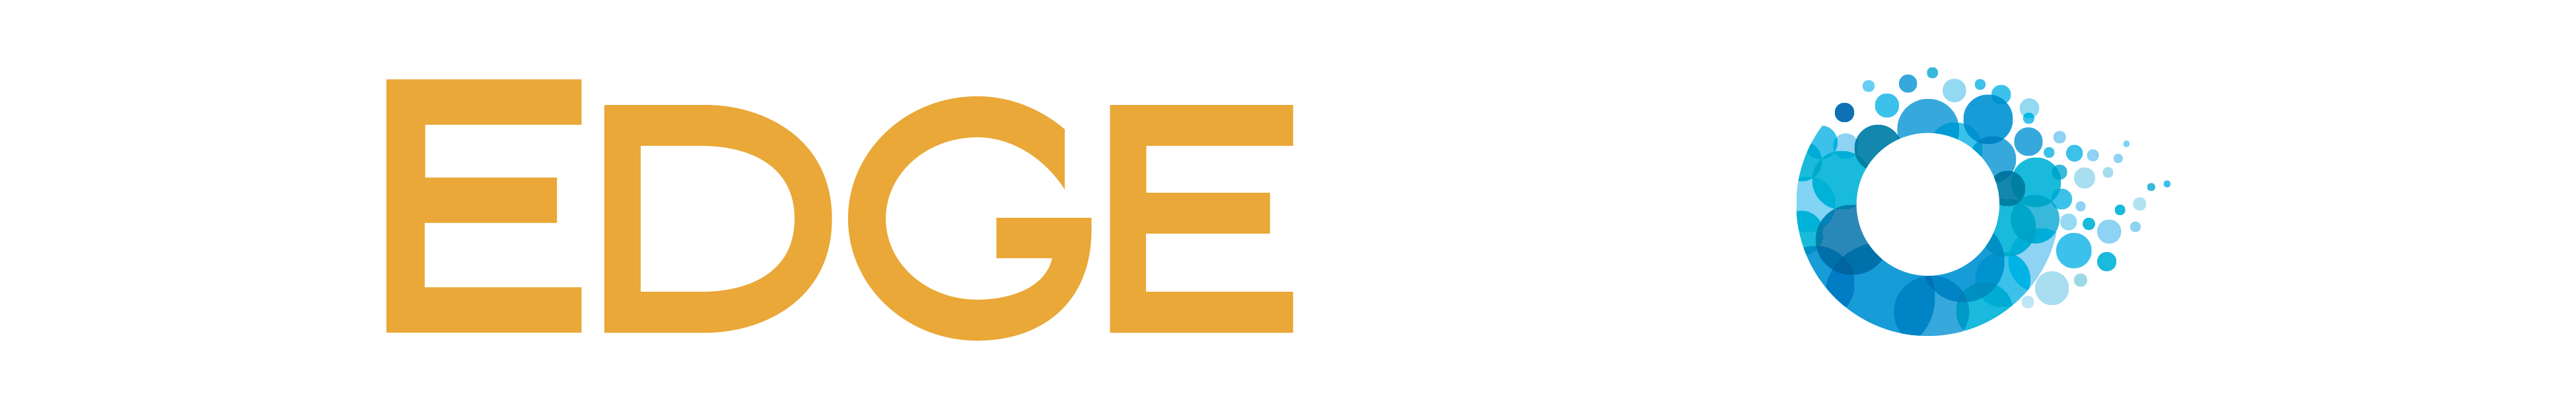 edgepro-logo